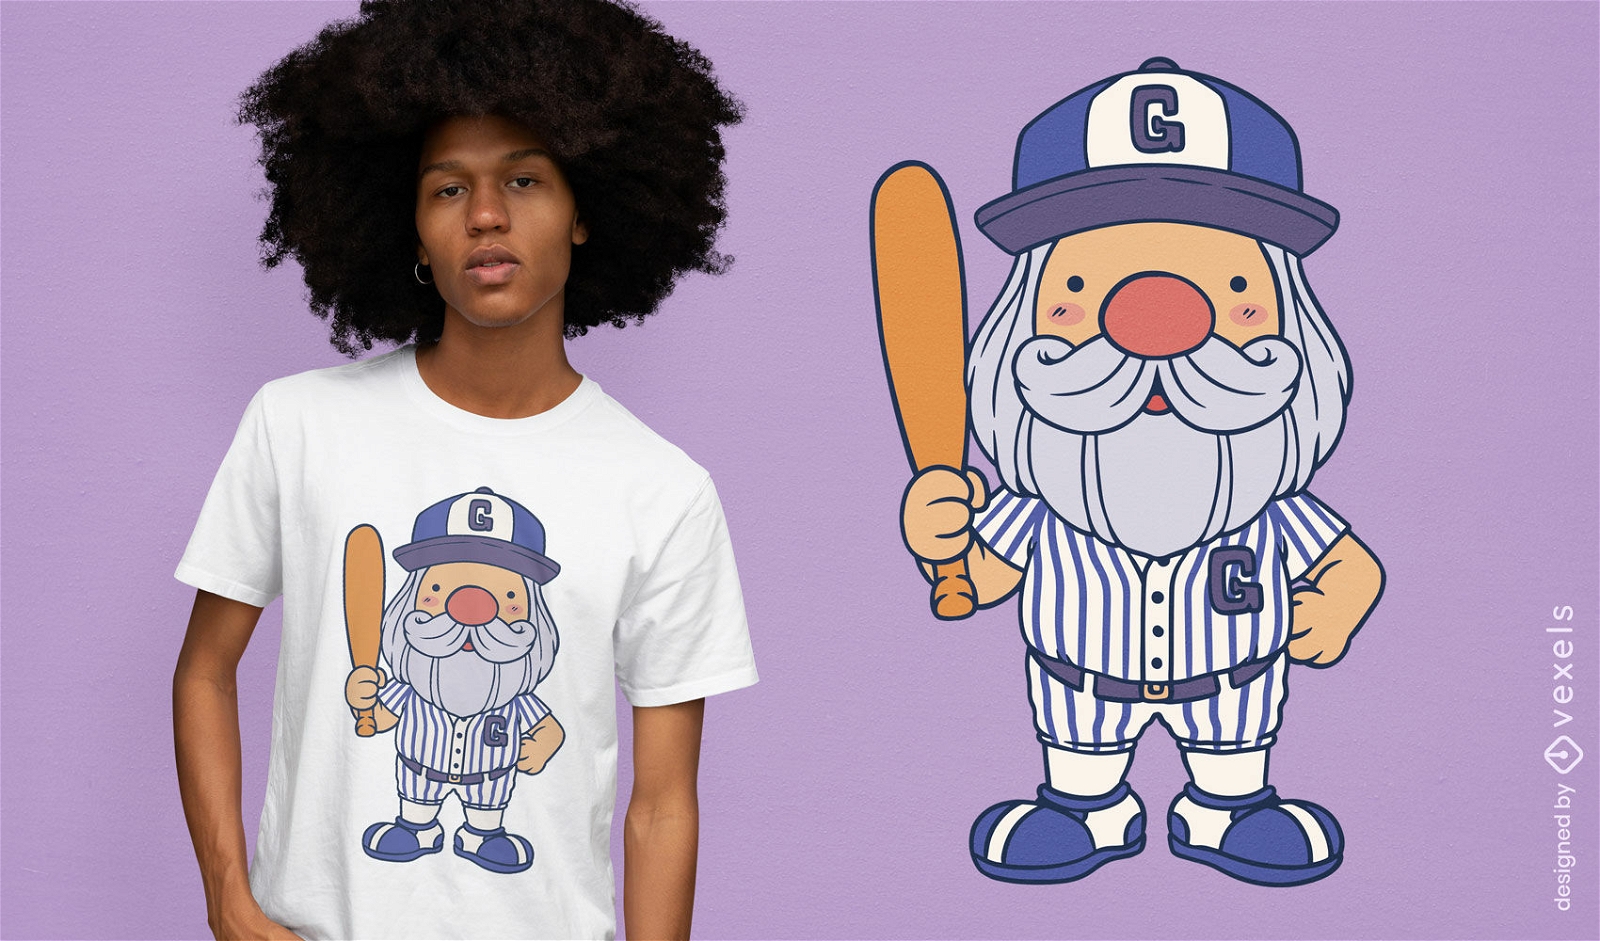 Baseball player gnome t-shirt design